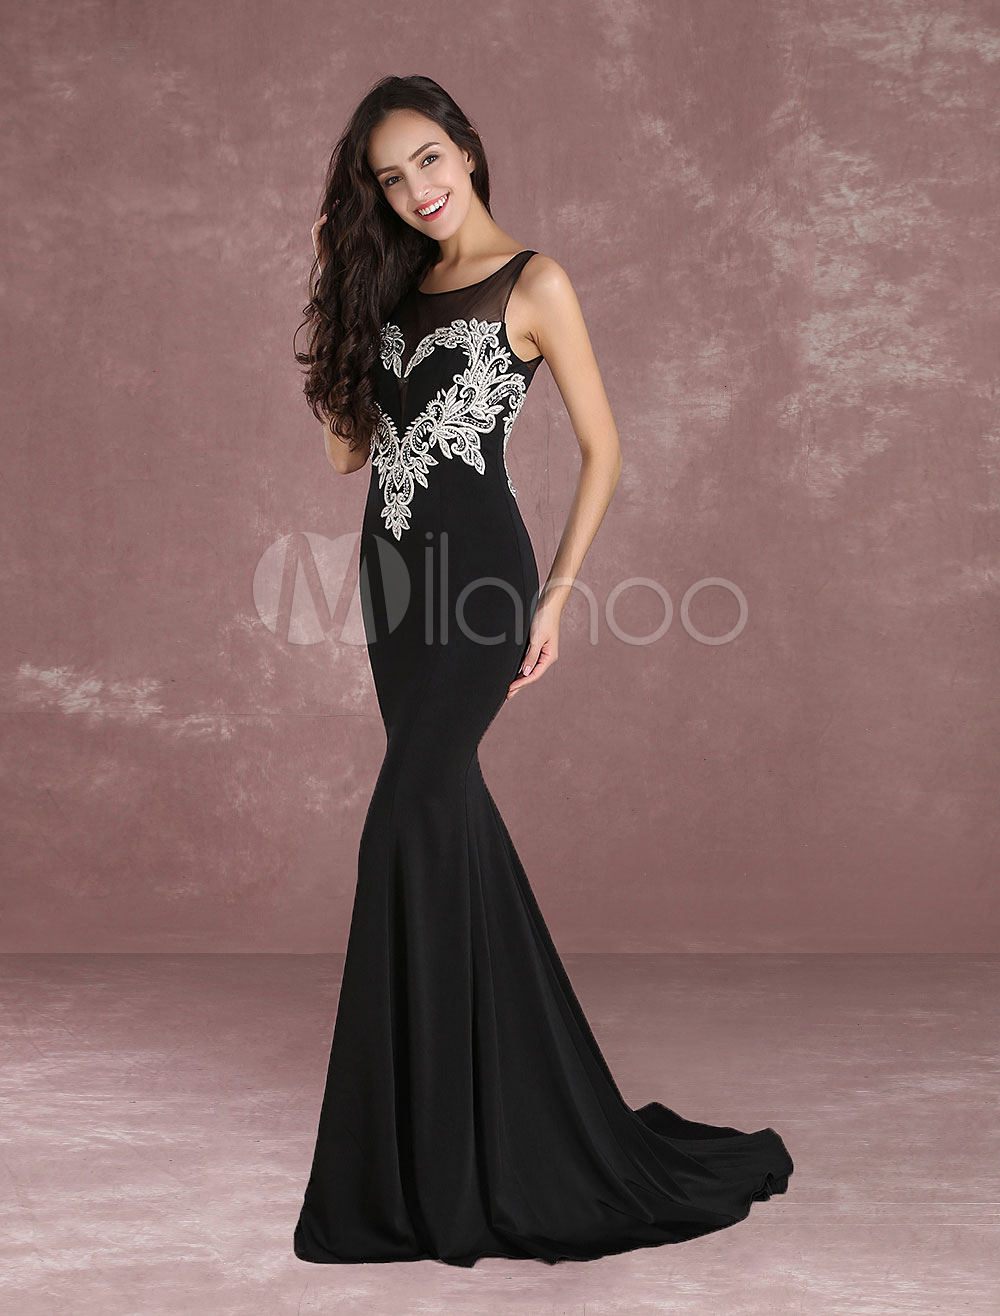 Mermaid Prom Dress Long 2018 Illusion Lace Applique Evening Dress Black Jewel Sleeveless Party Dress With Train (Wedding Prom Dresses) photo